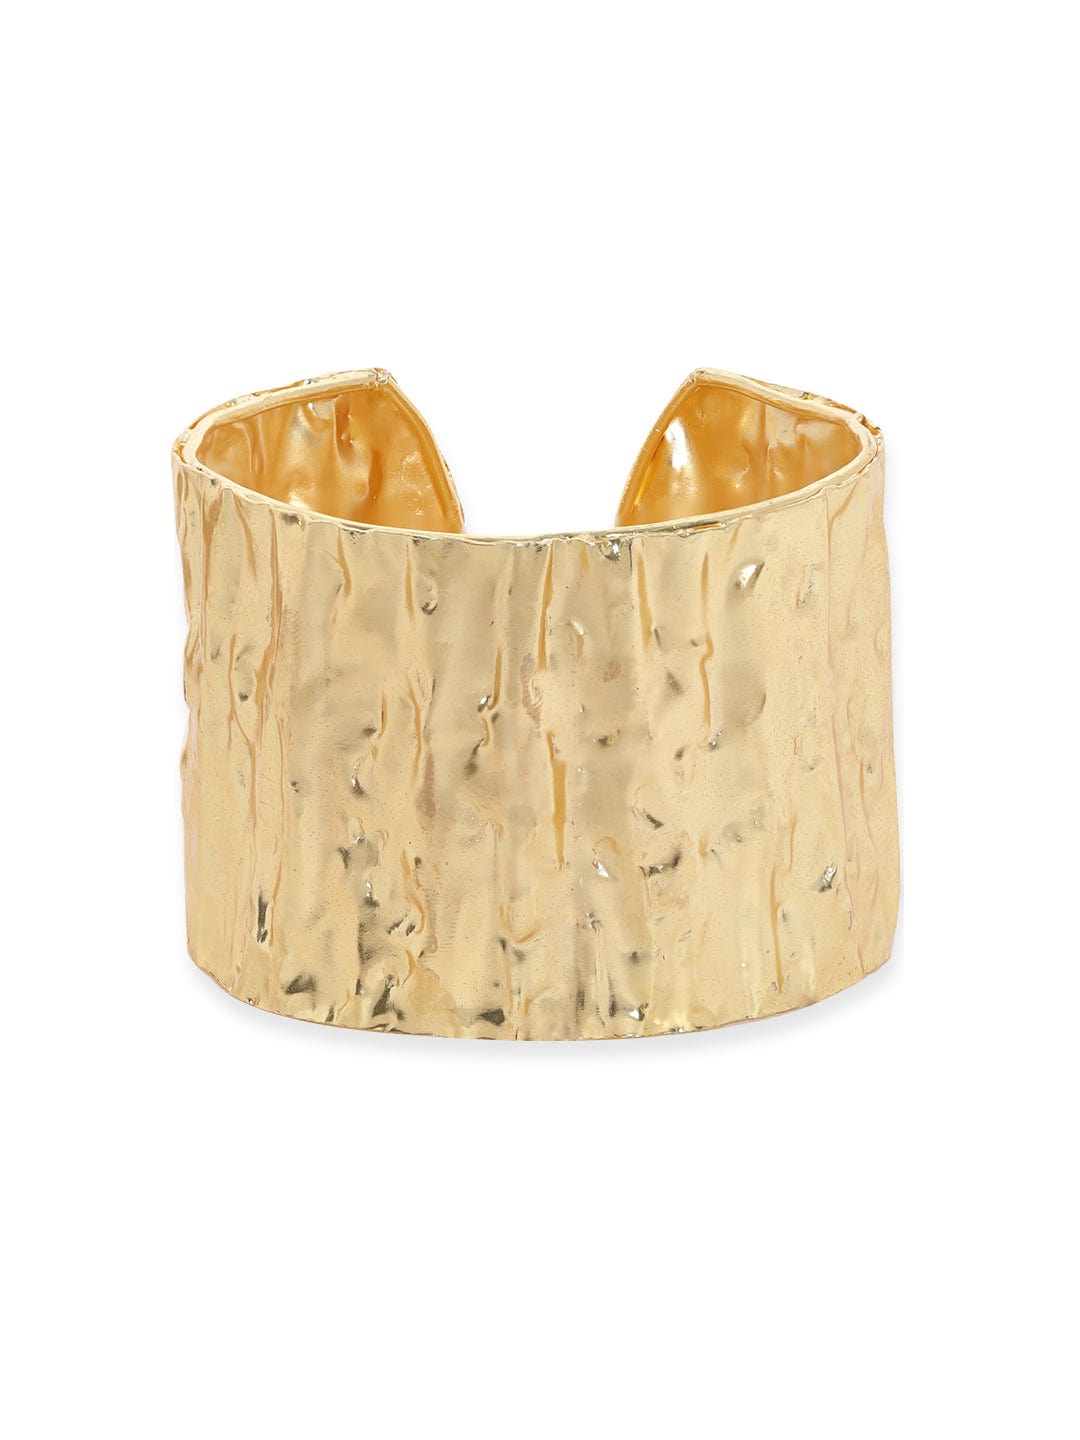 I Reiss BIR295Y | Yellow gold hammered cuff bracelet - Freedman Jewelers